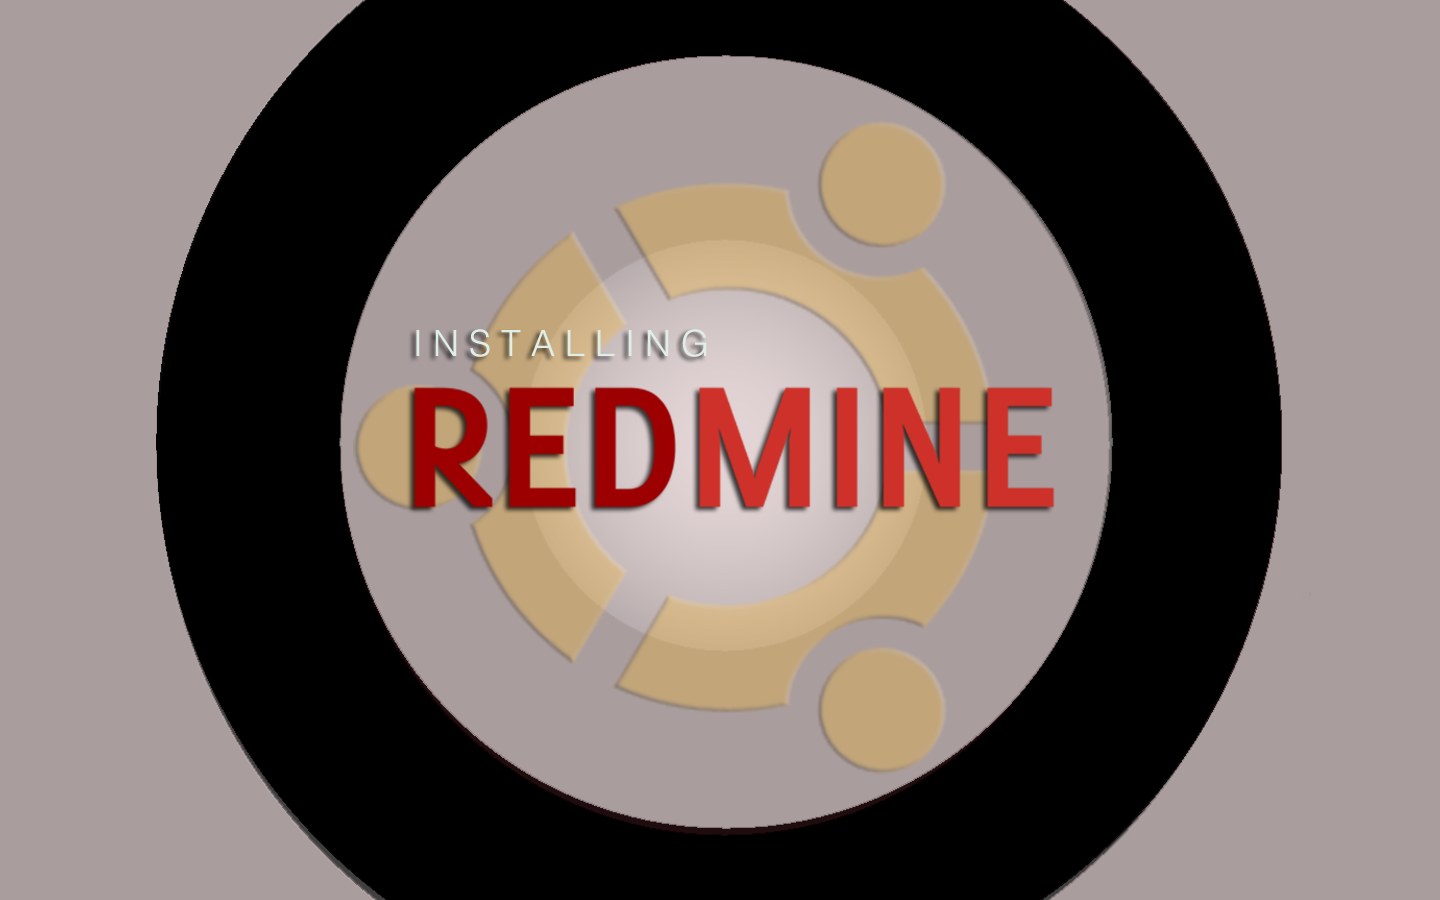 How to Install Redmine on Ubuntu 16.04 with Nginx & Unicorn